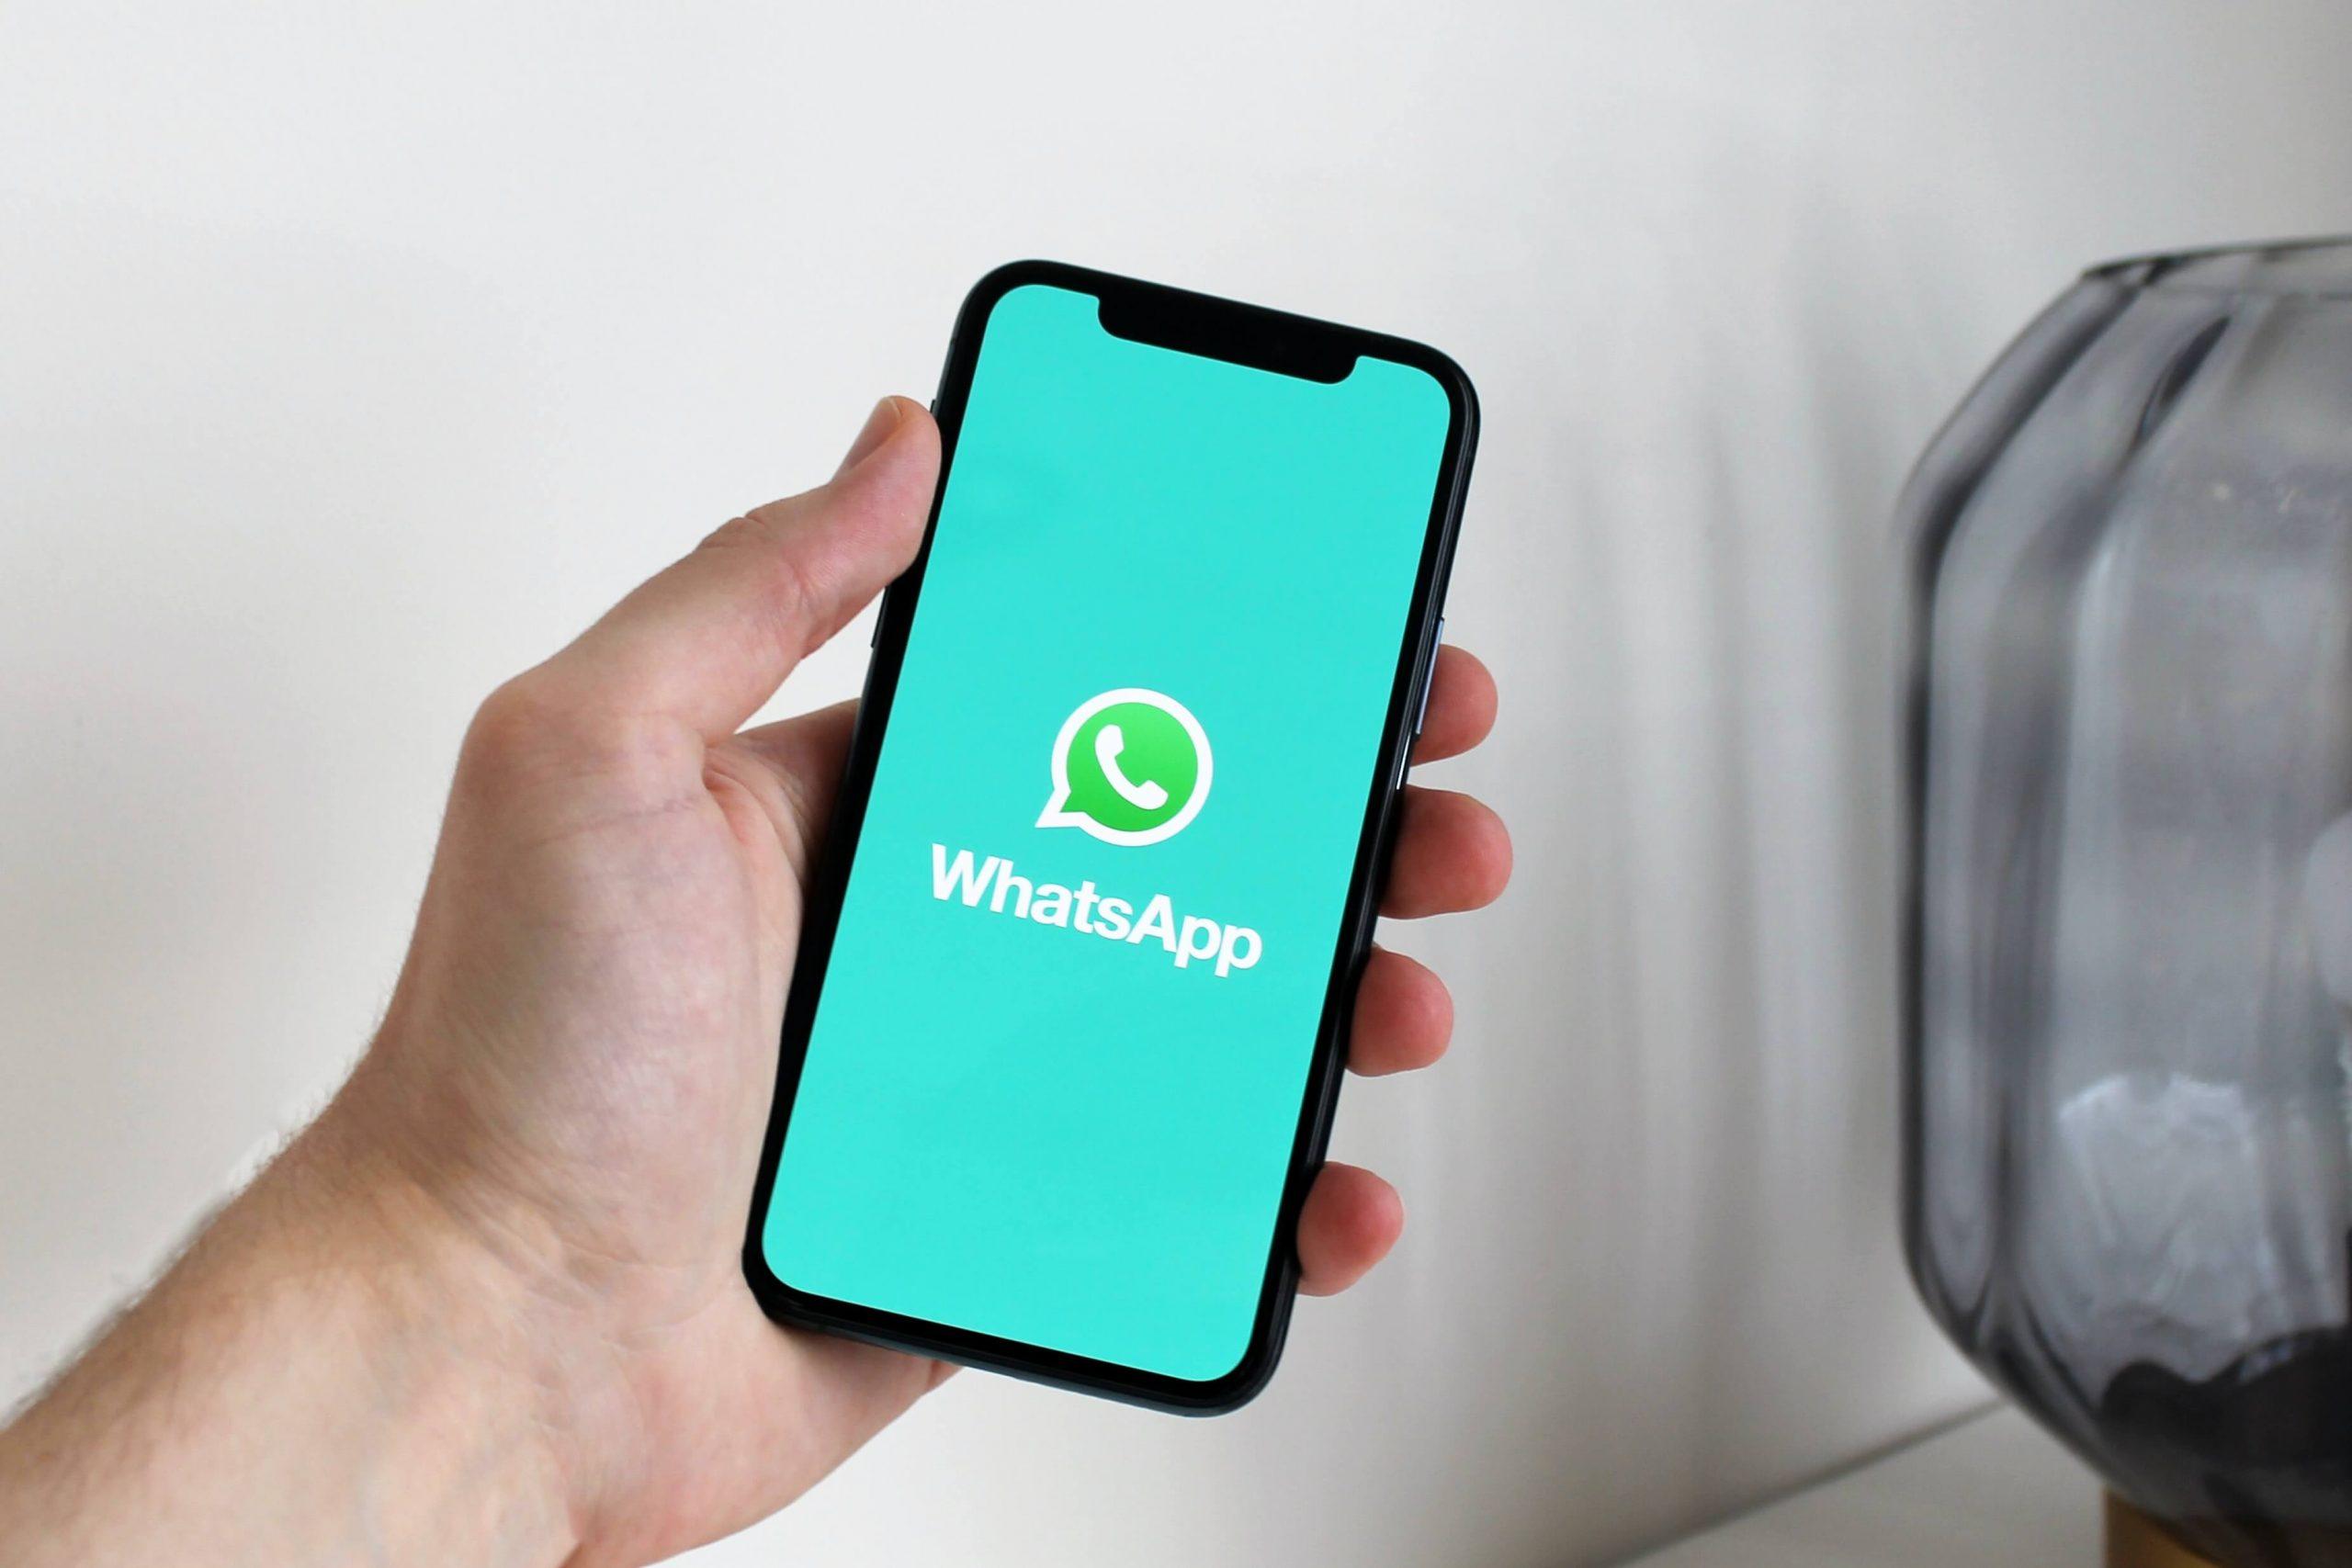 WhatsApp verification code scam